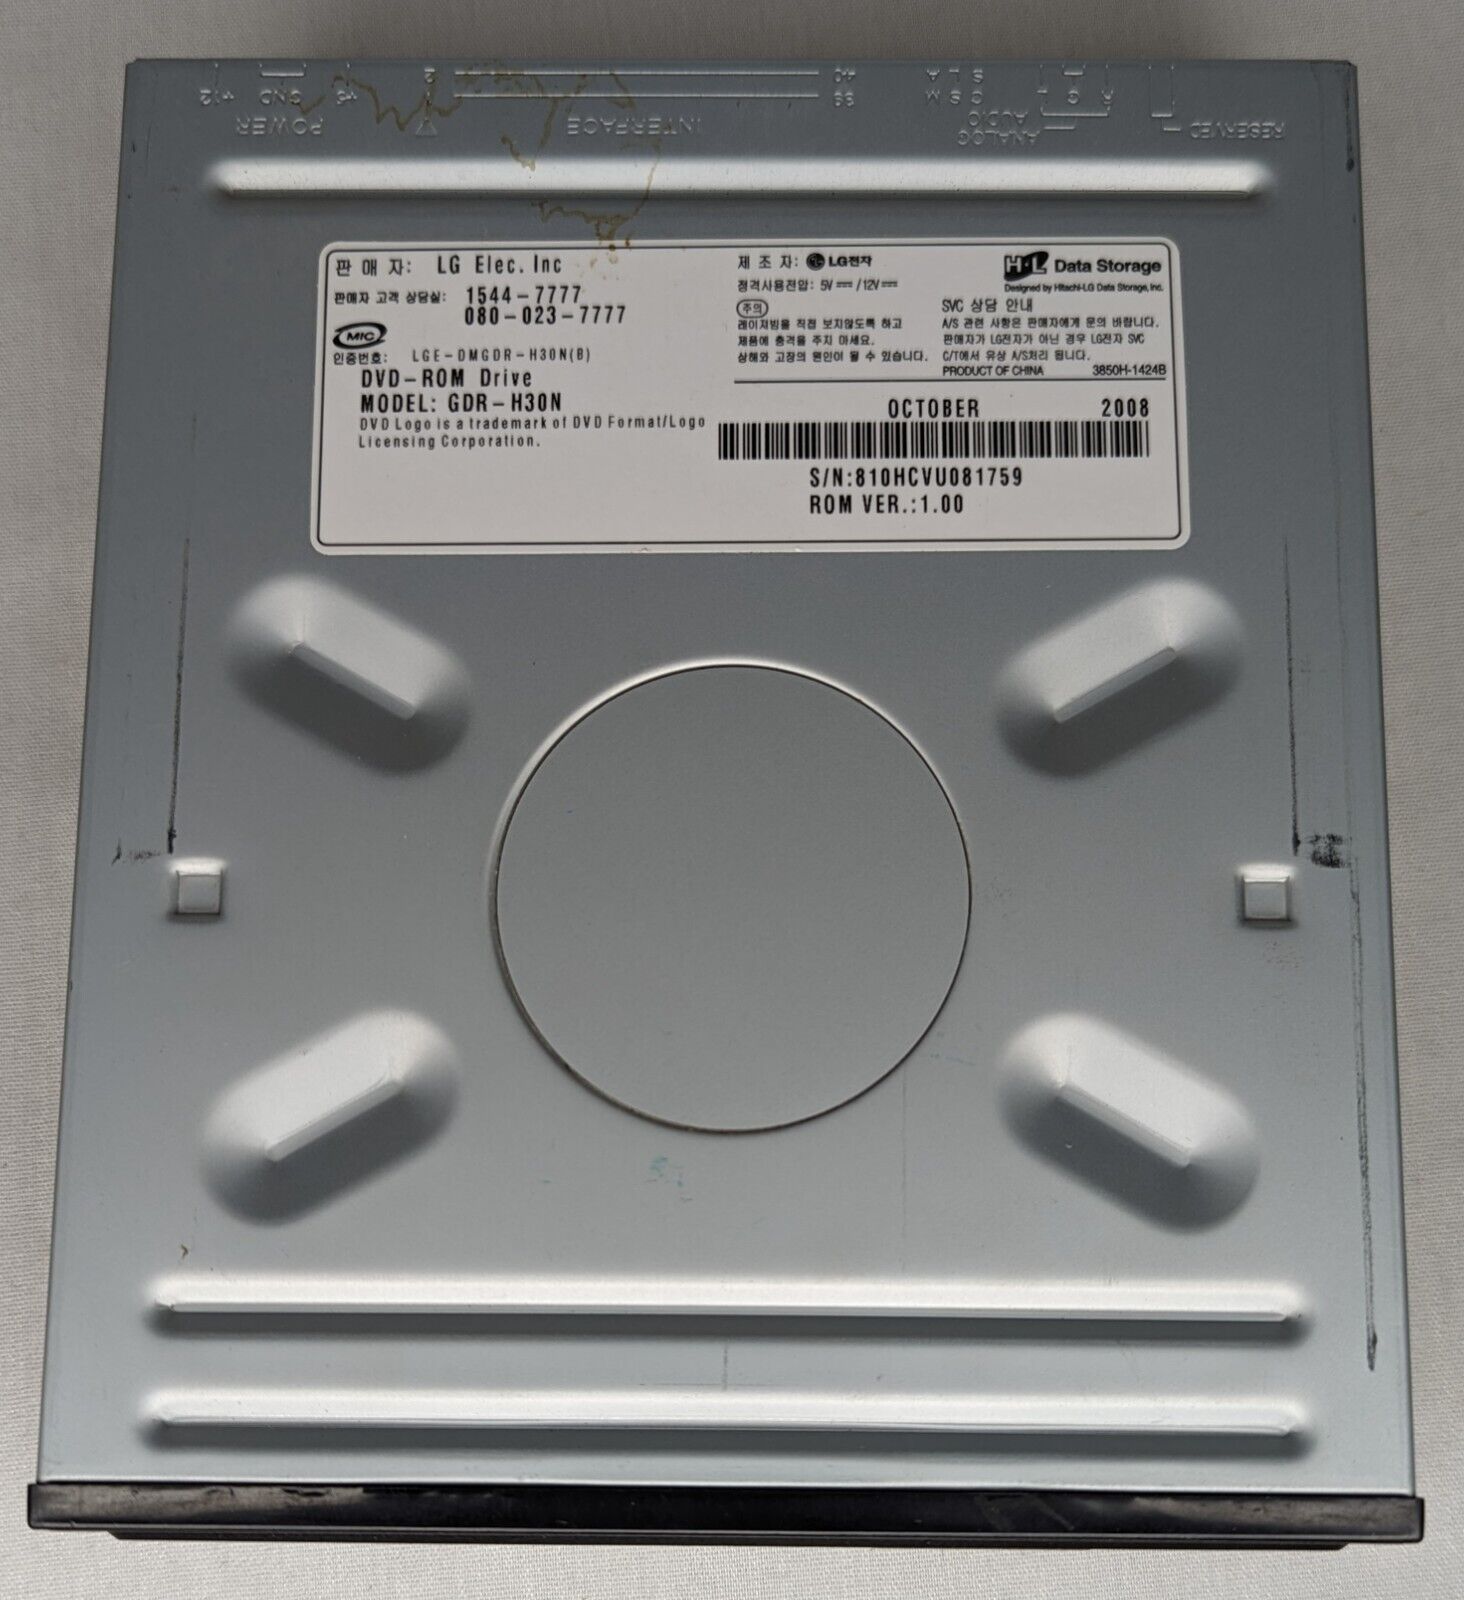 LG Electric Inc. GDRH30N Internal DVD Rom Drive - Untested